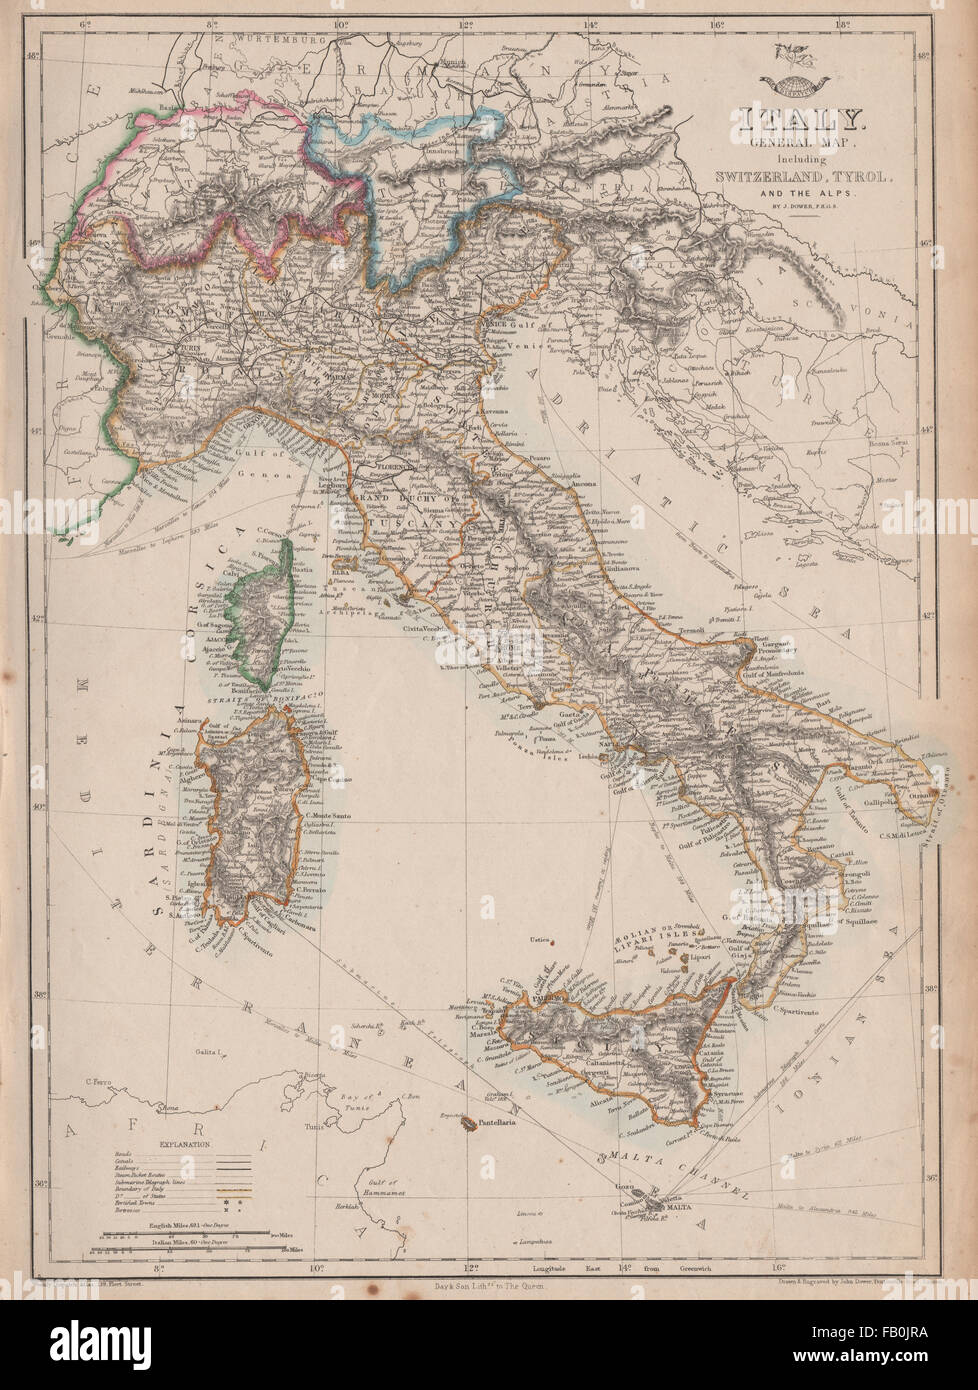 ITALIEN SCHWEIZ TIROLER ALPEN. Italiens. MITGIFT. Versand Atlas, 1862-Karte  Stockfotografie - Alamy